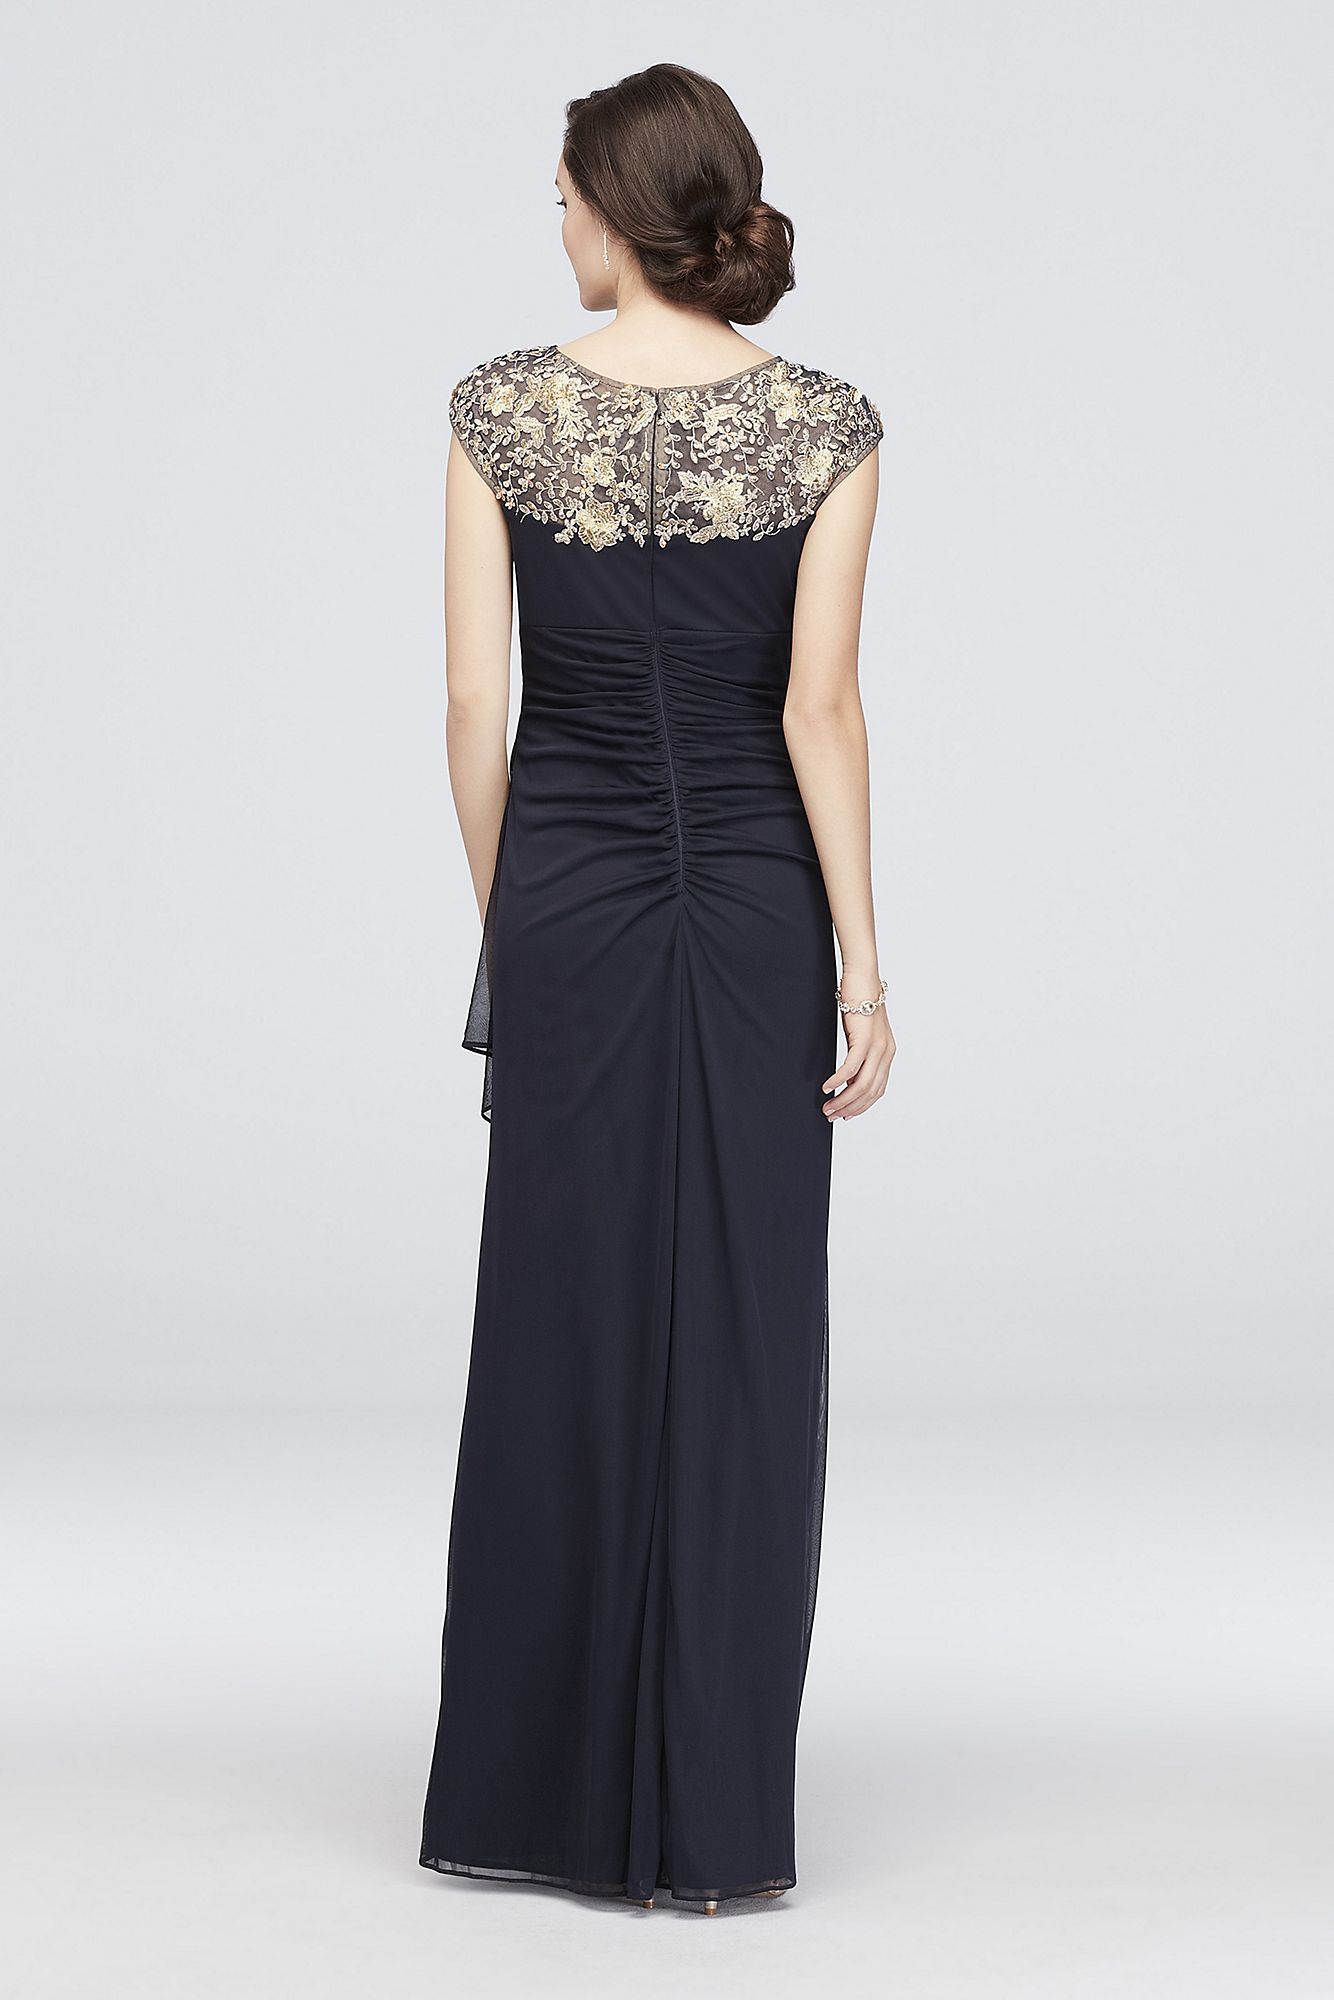 Elegant Cap Sleeve Long Lace Embellished Jersey Dress 1866X